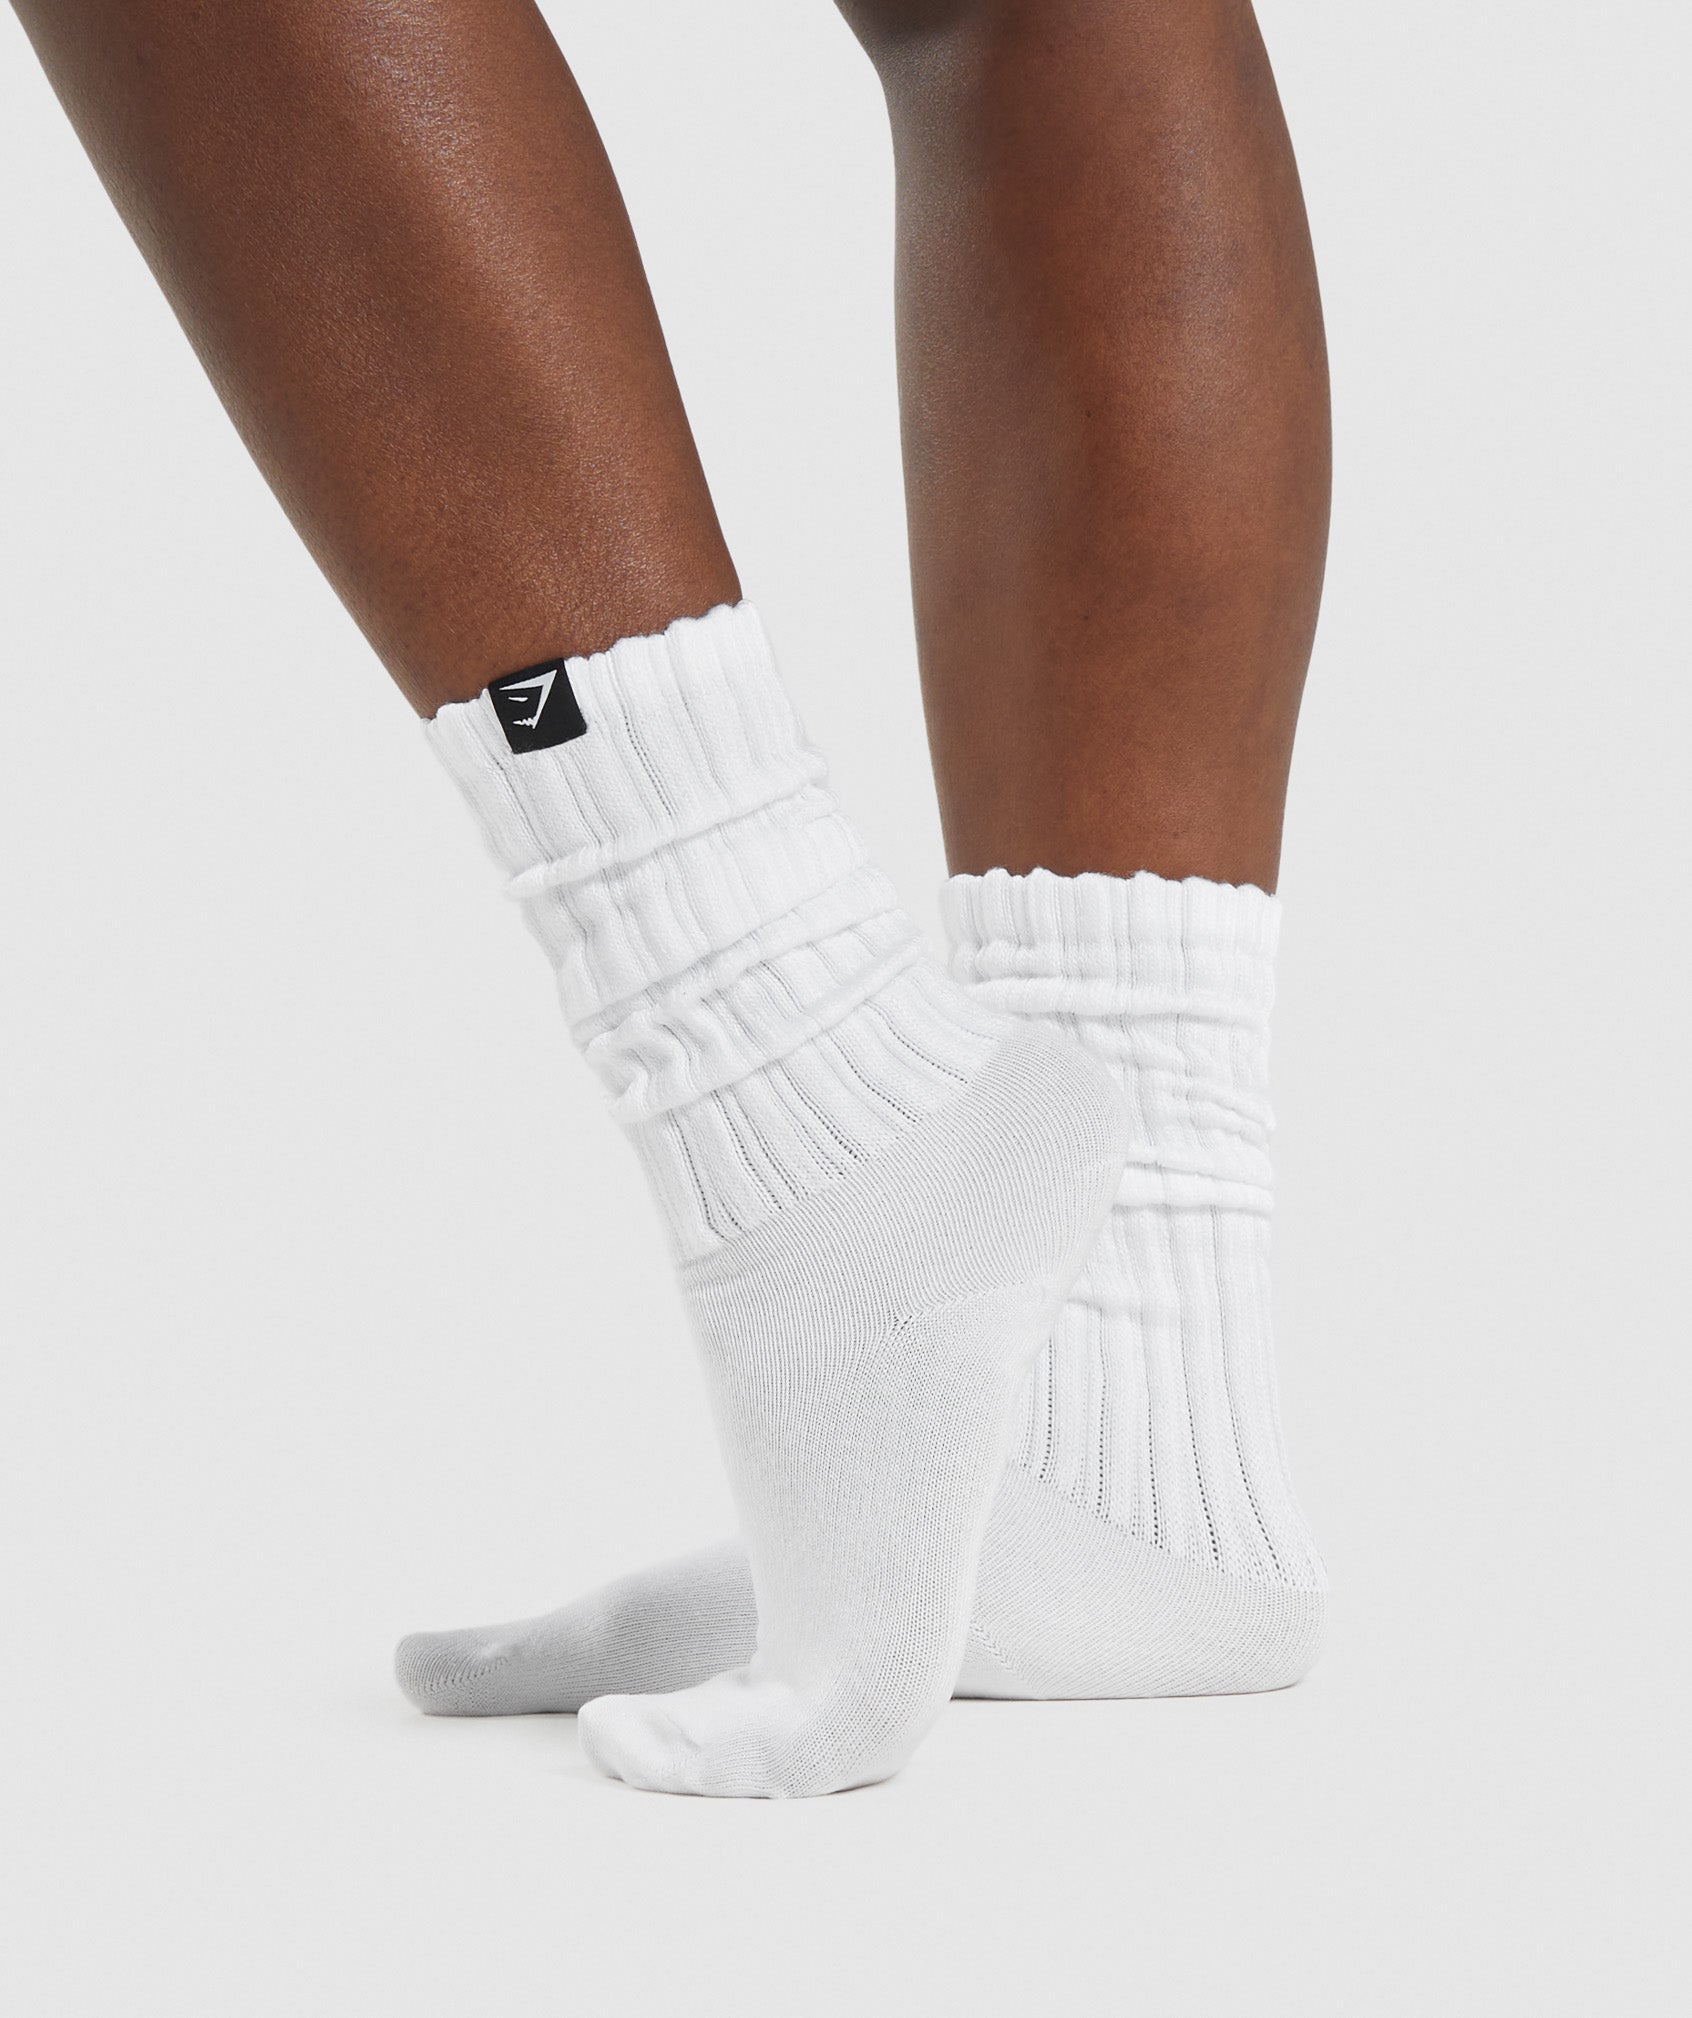 Original Brand new Adidas gymshark Muji socks